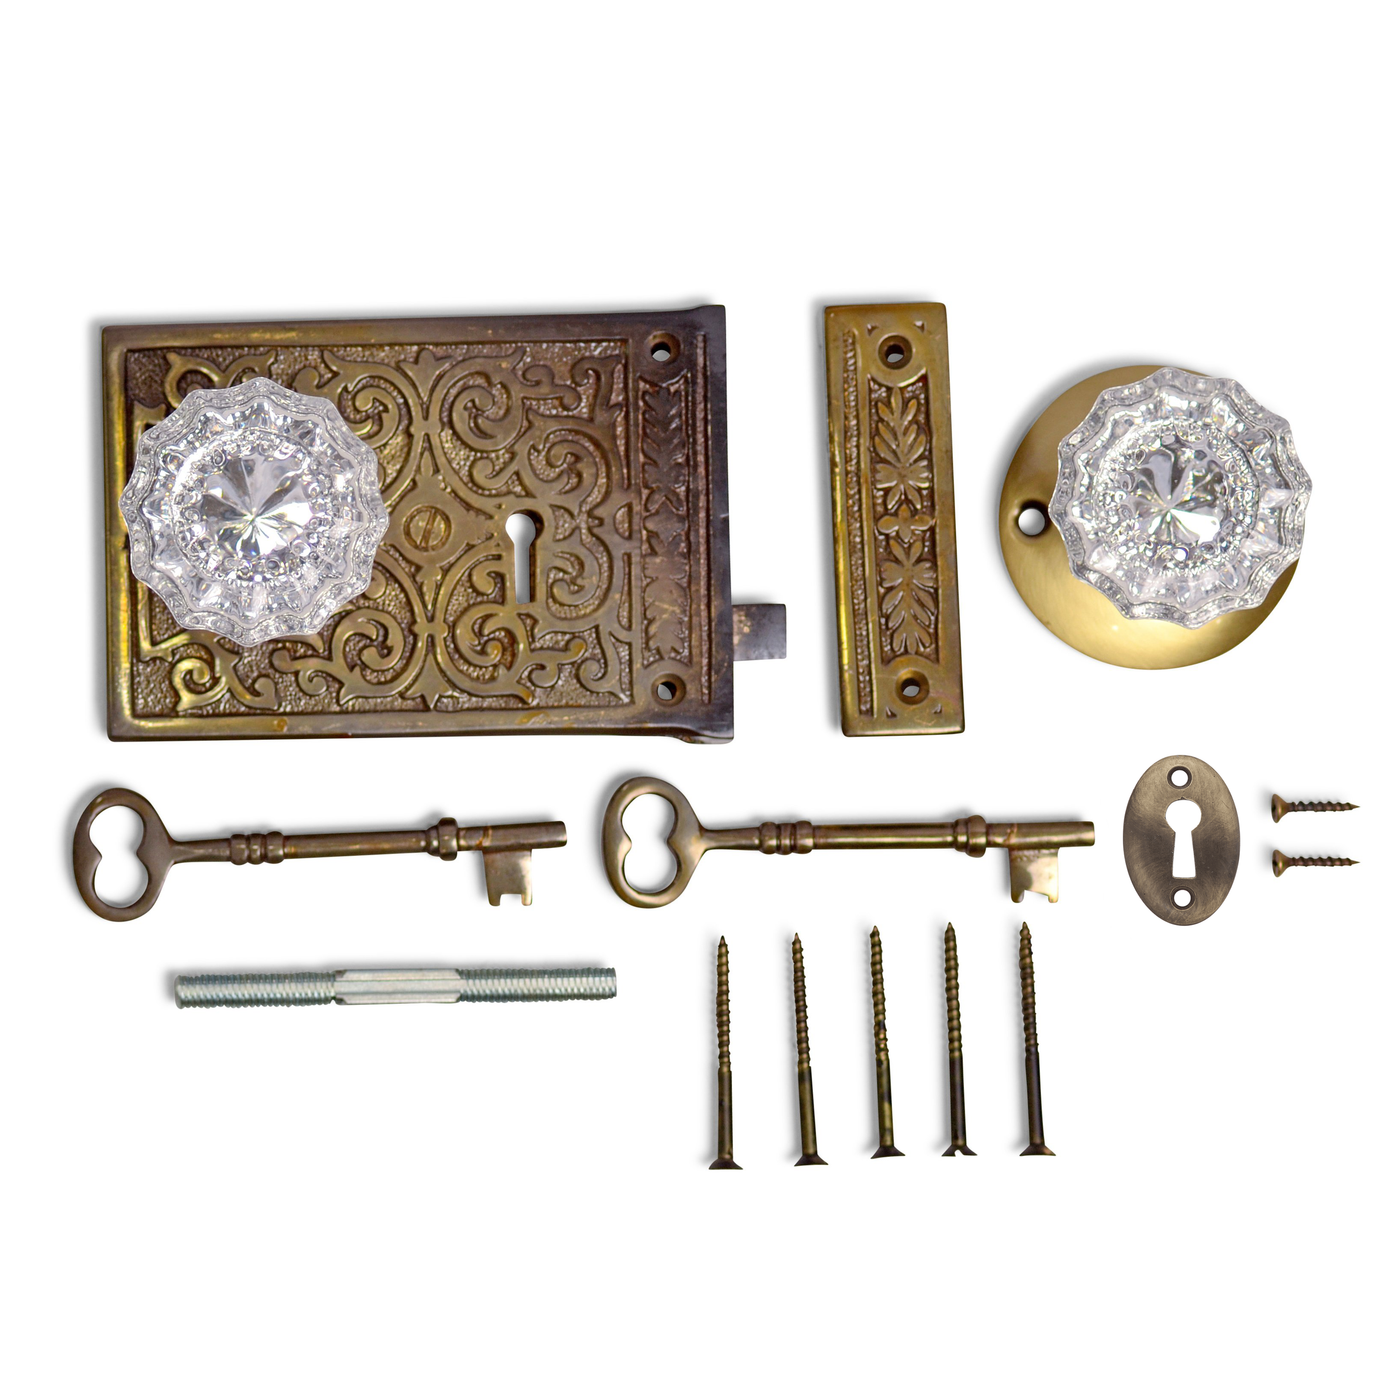 Ornate Victorian Rim Lock Set with Regency Fluted Glass Knob and Regular Rosette (Antique Brass Finish)